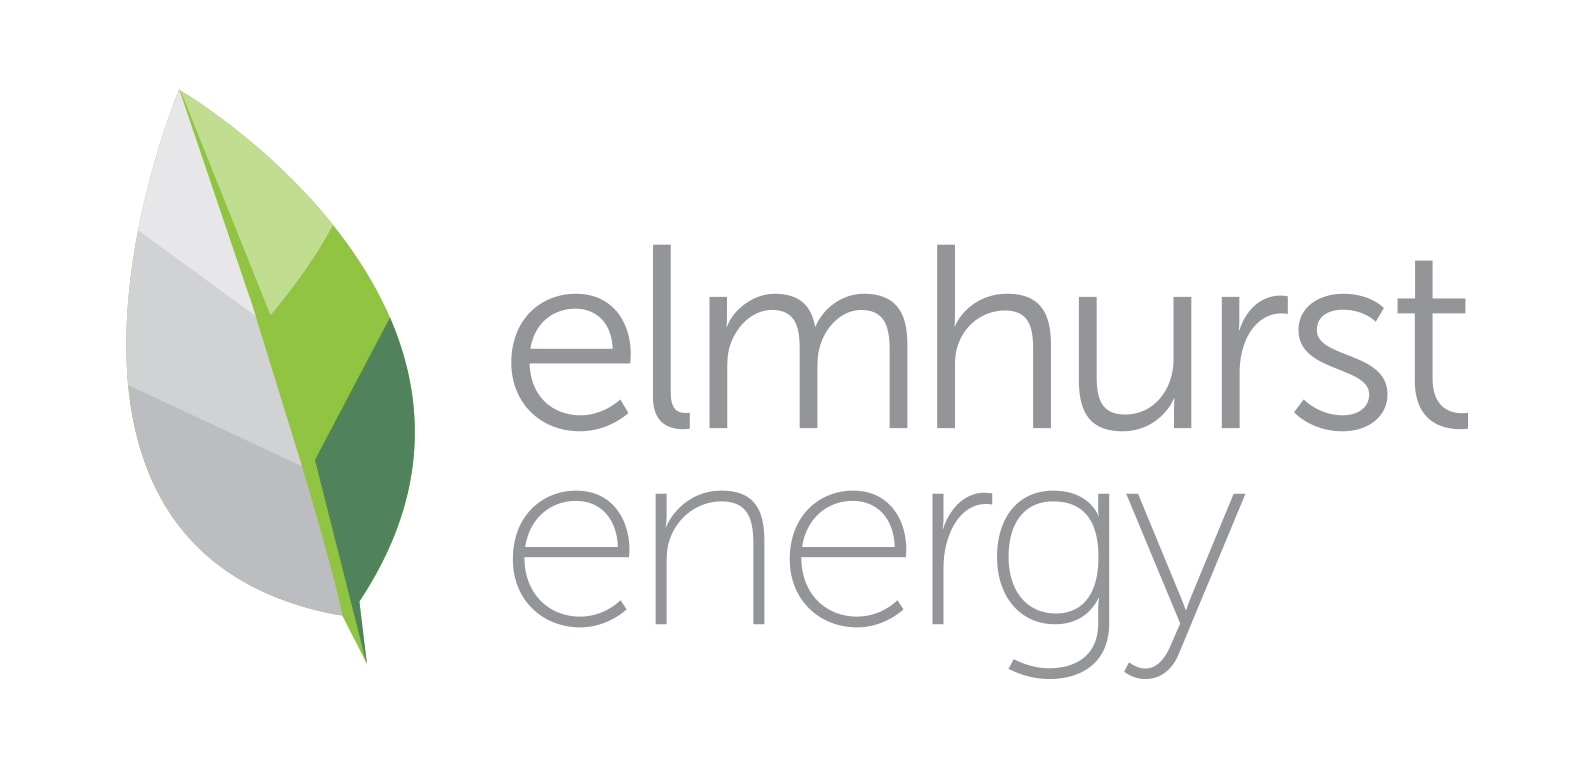 elmhurst energy eco4 gurus